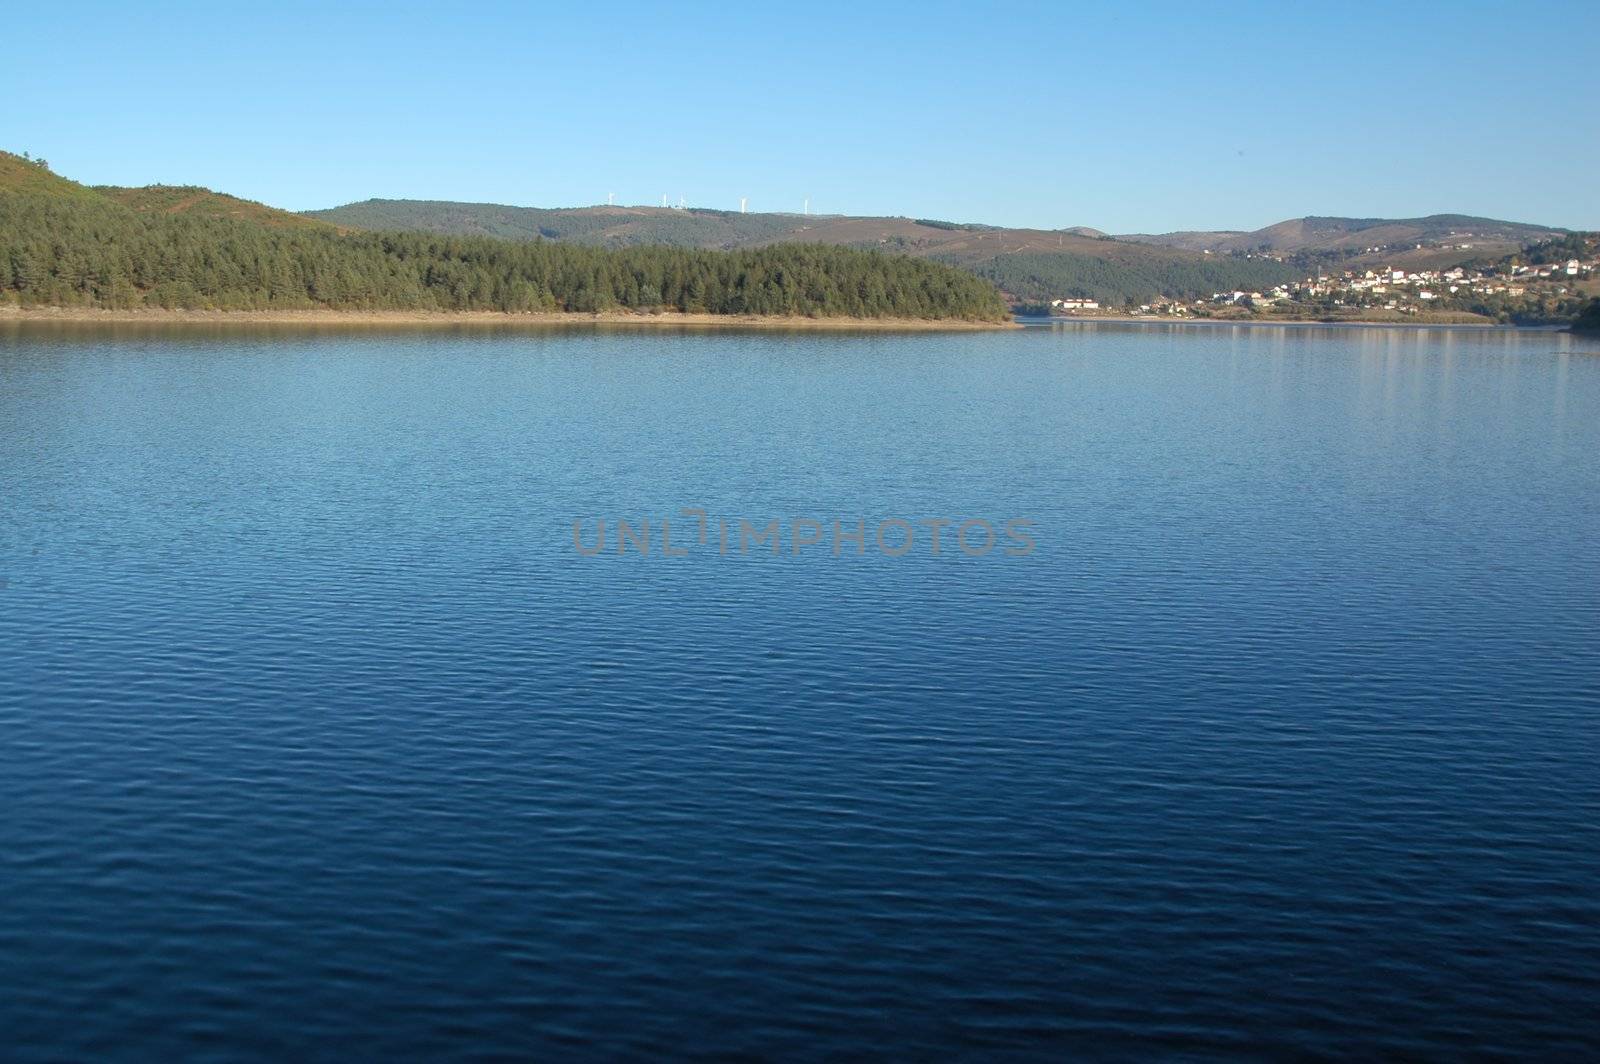 lake of hydroelectric barrage in venda nova, portugal by raalves